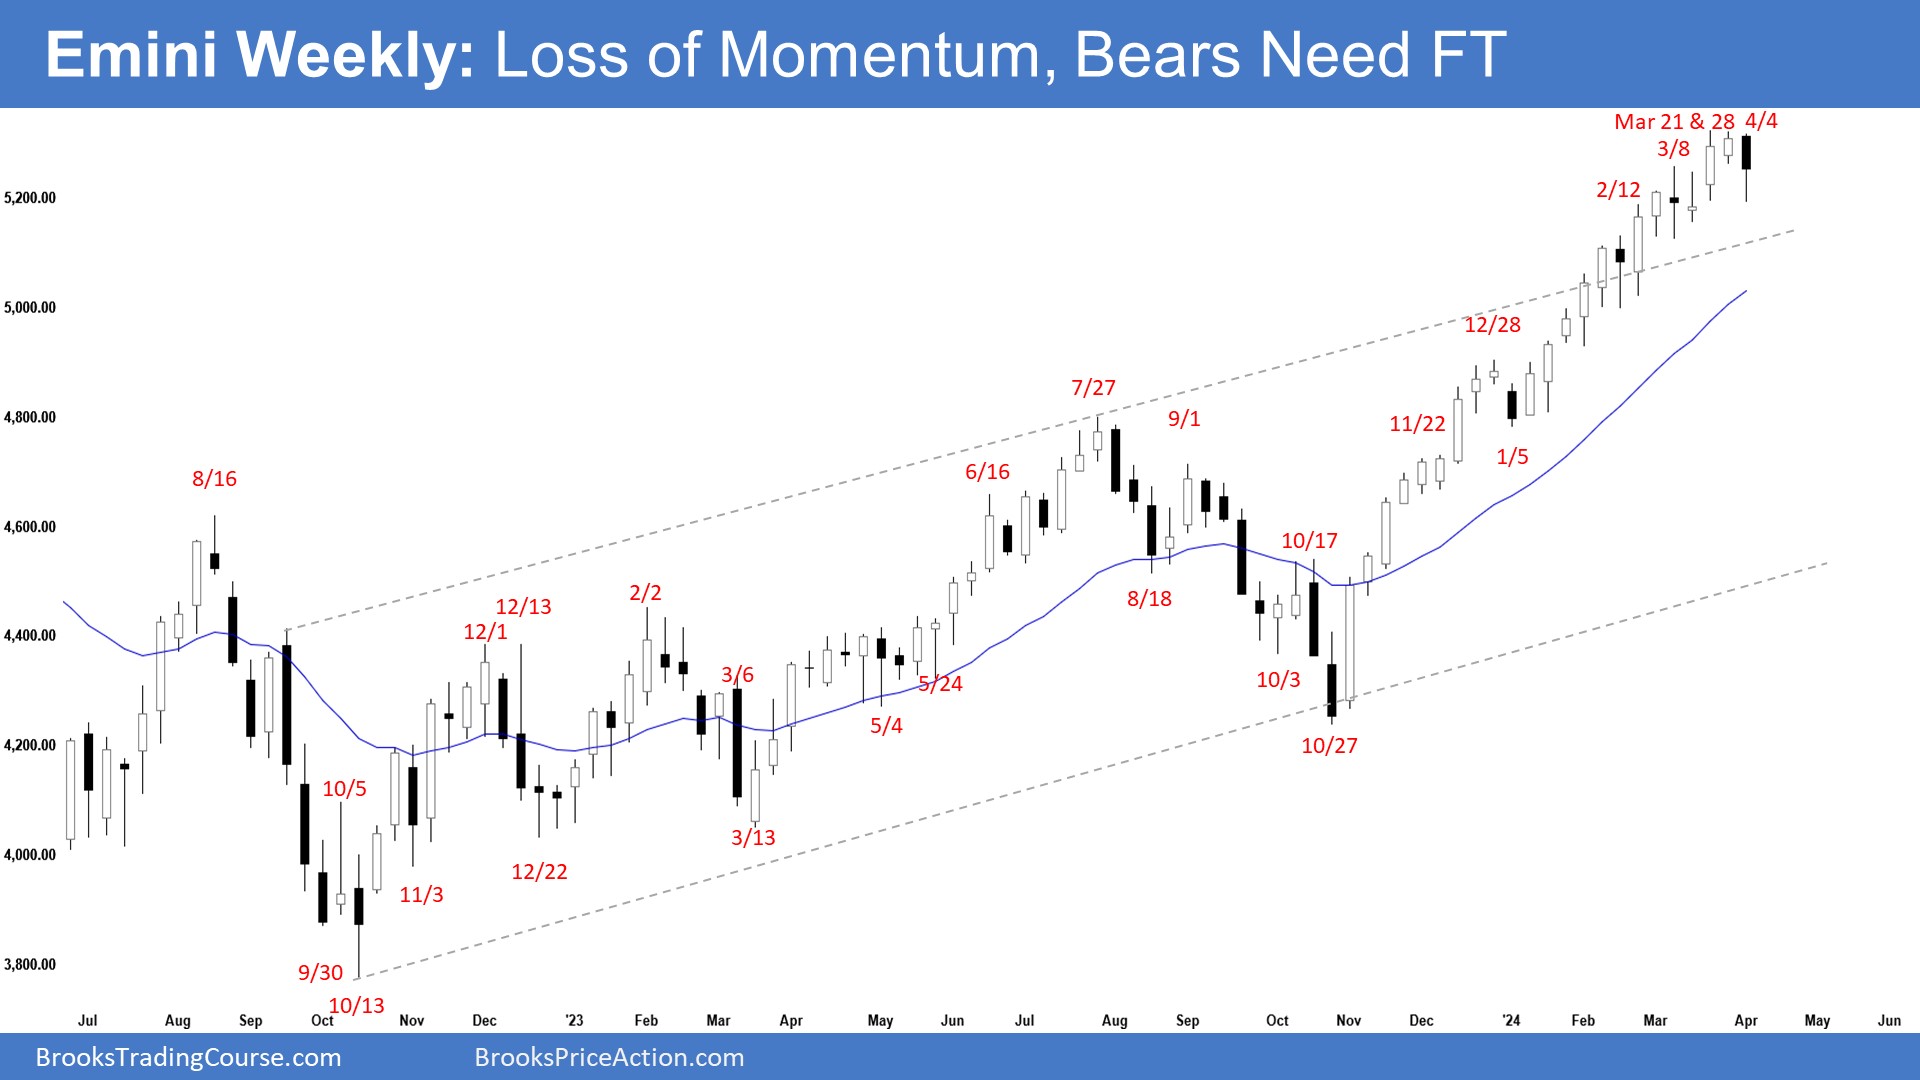 Emini Weekly: Loss of Momentum, Bears Need FT, Emini Overlapping Price Action